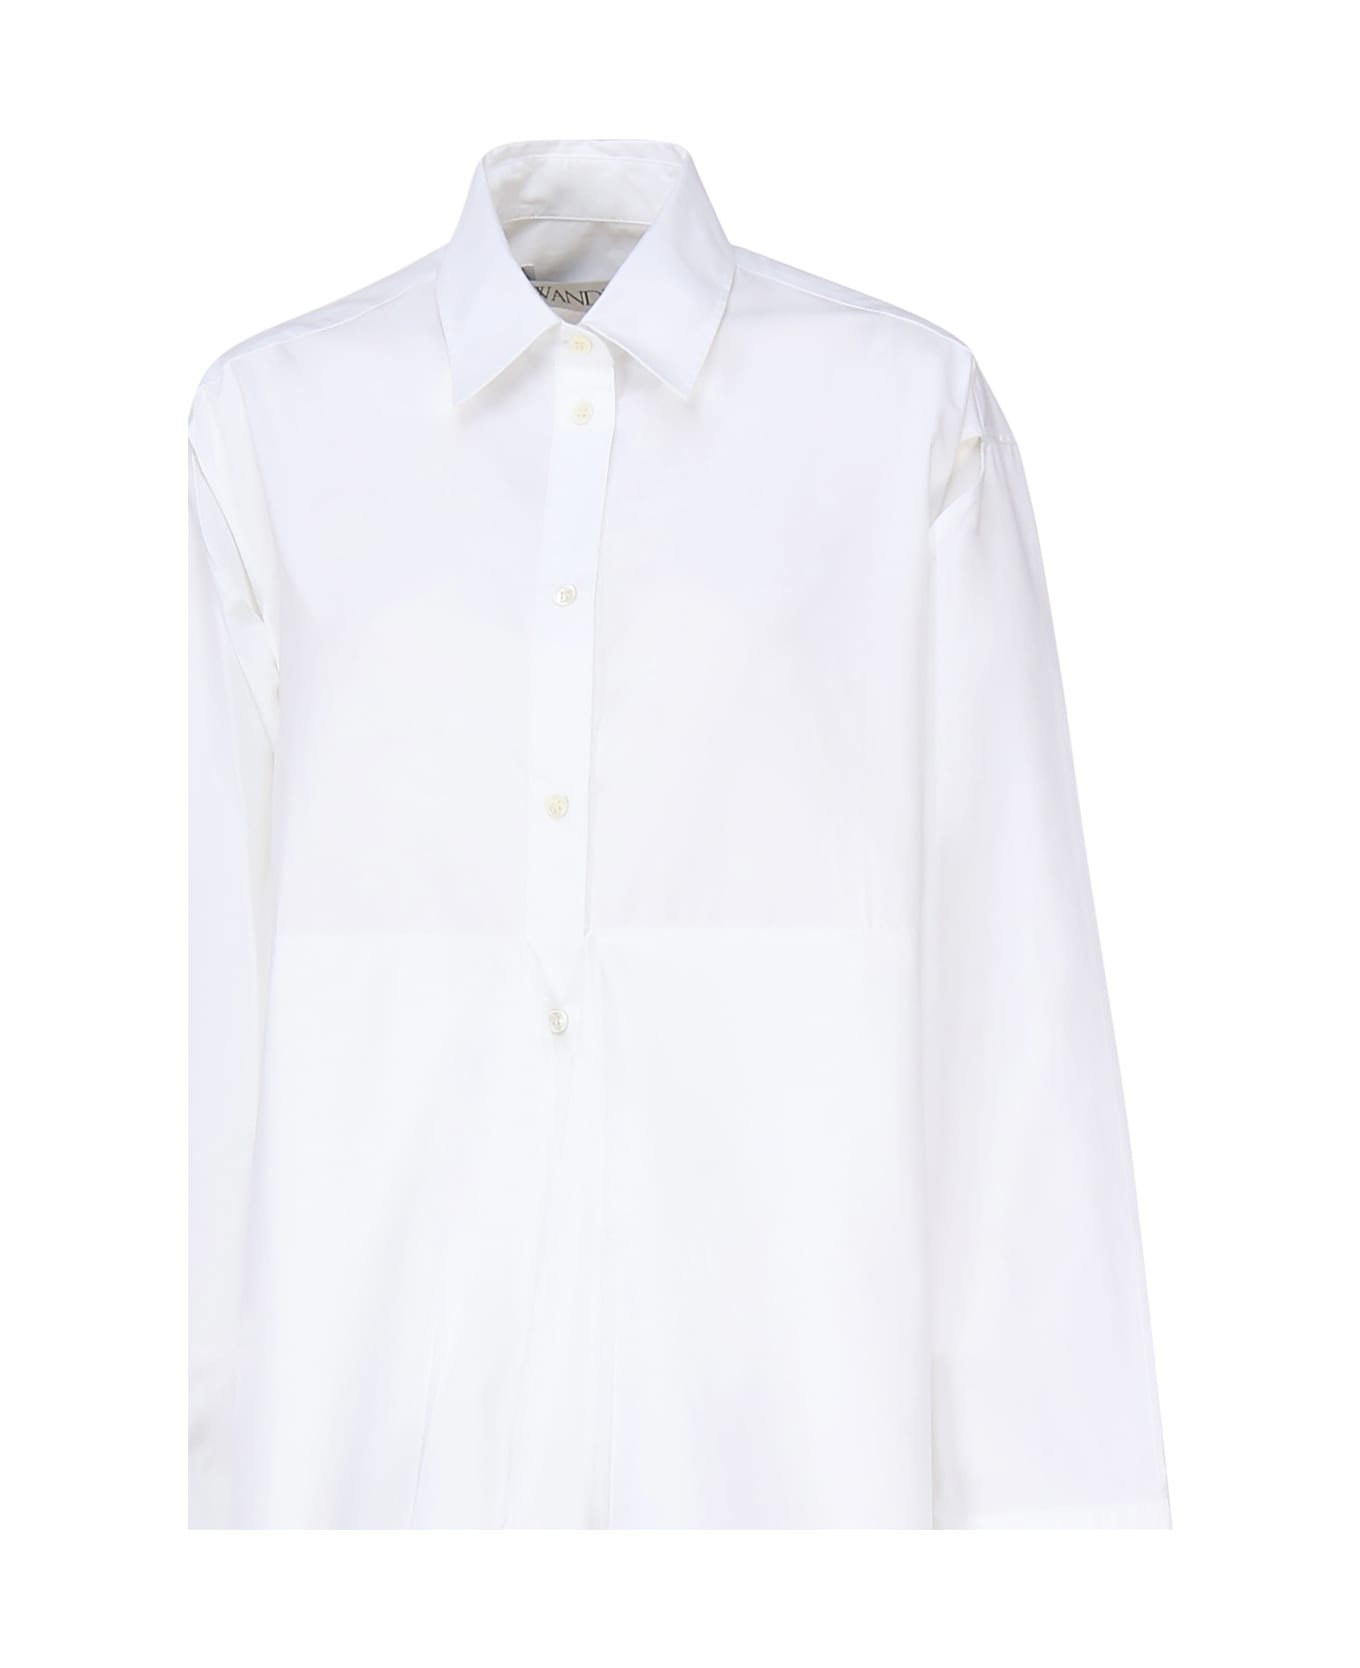 J.W. Anderson Draped Shirt With Peplum - White